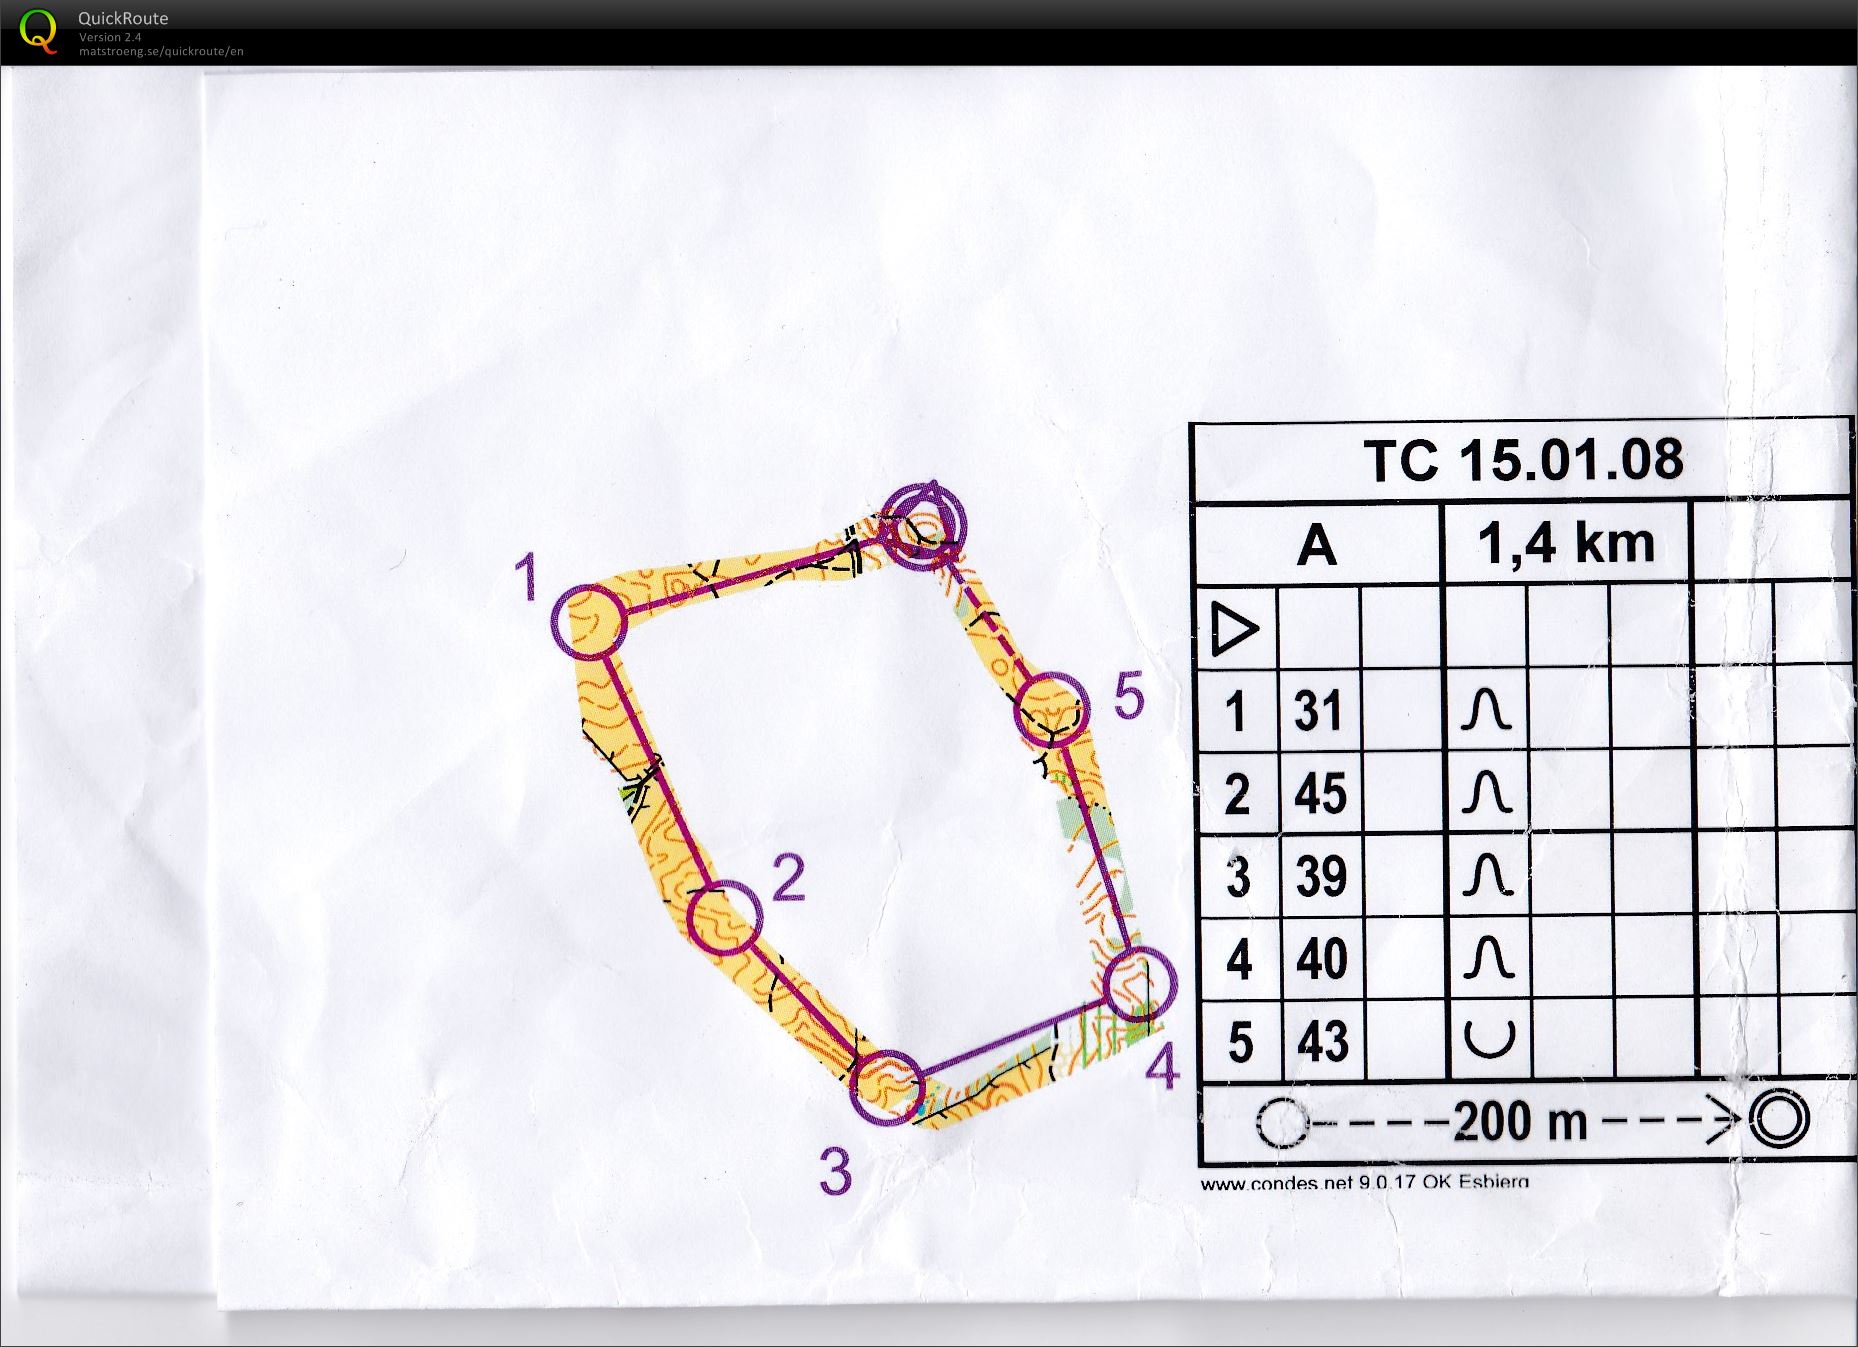 TC træning i Ryekol runde 2 (2015-01-08)